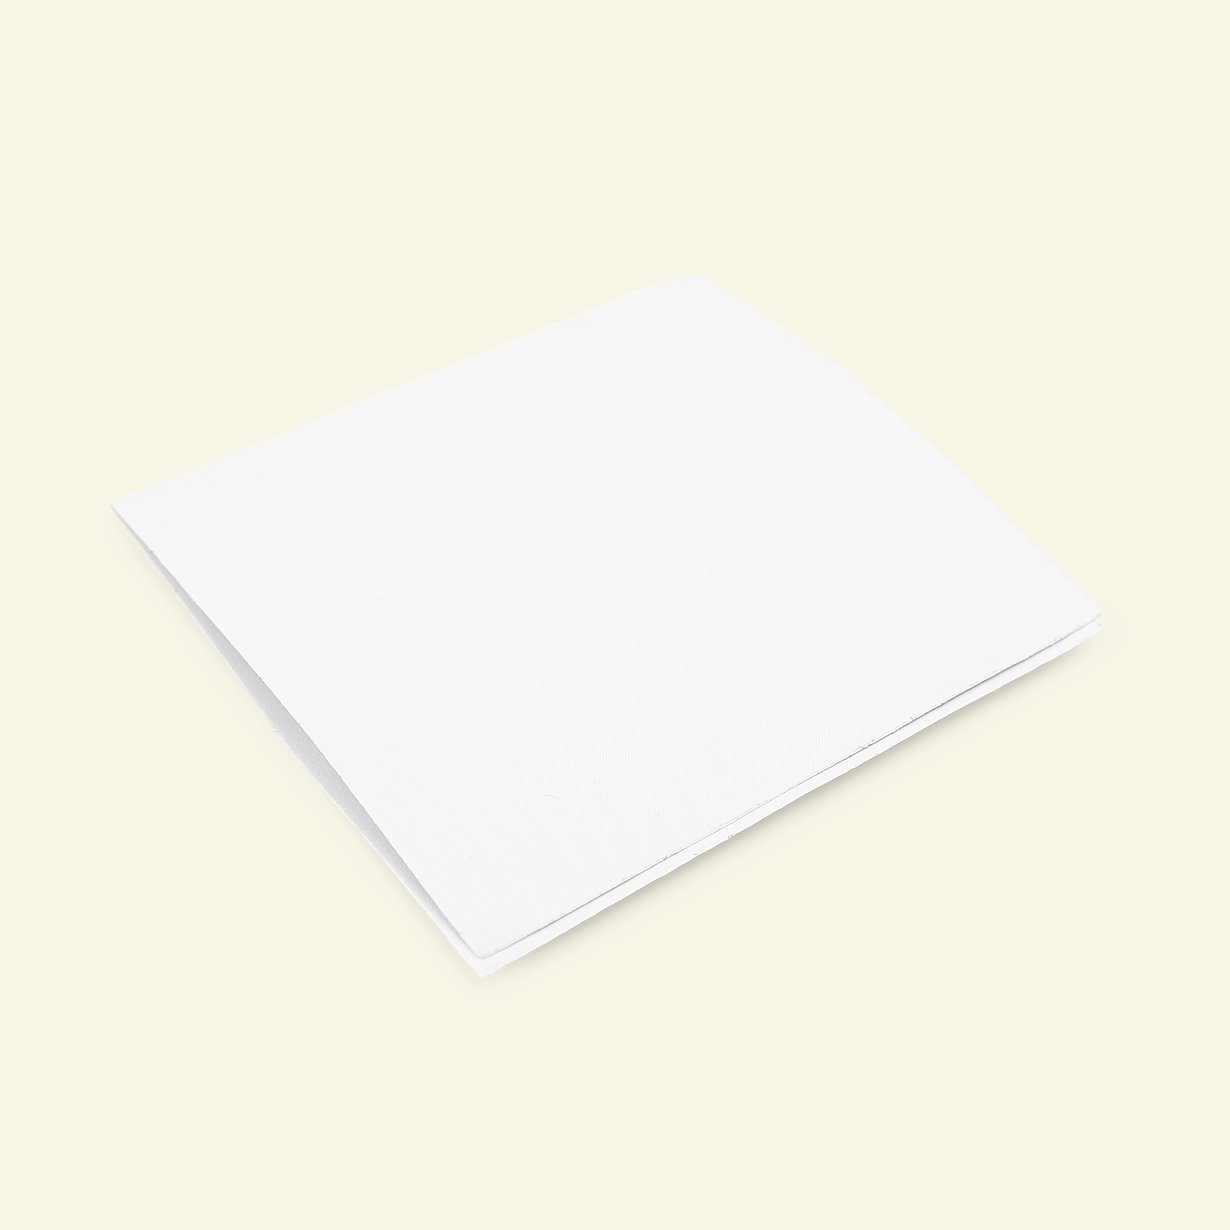 Lap til rep. nylon 10x20cm hvid | Selfmade®